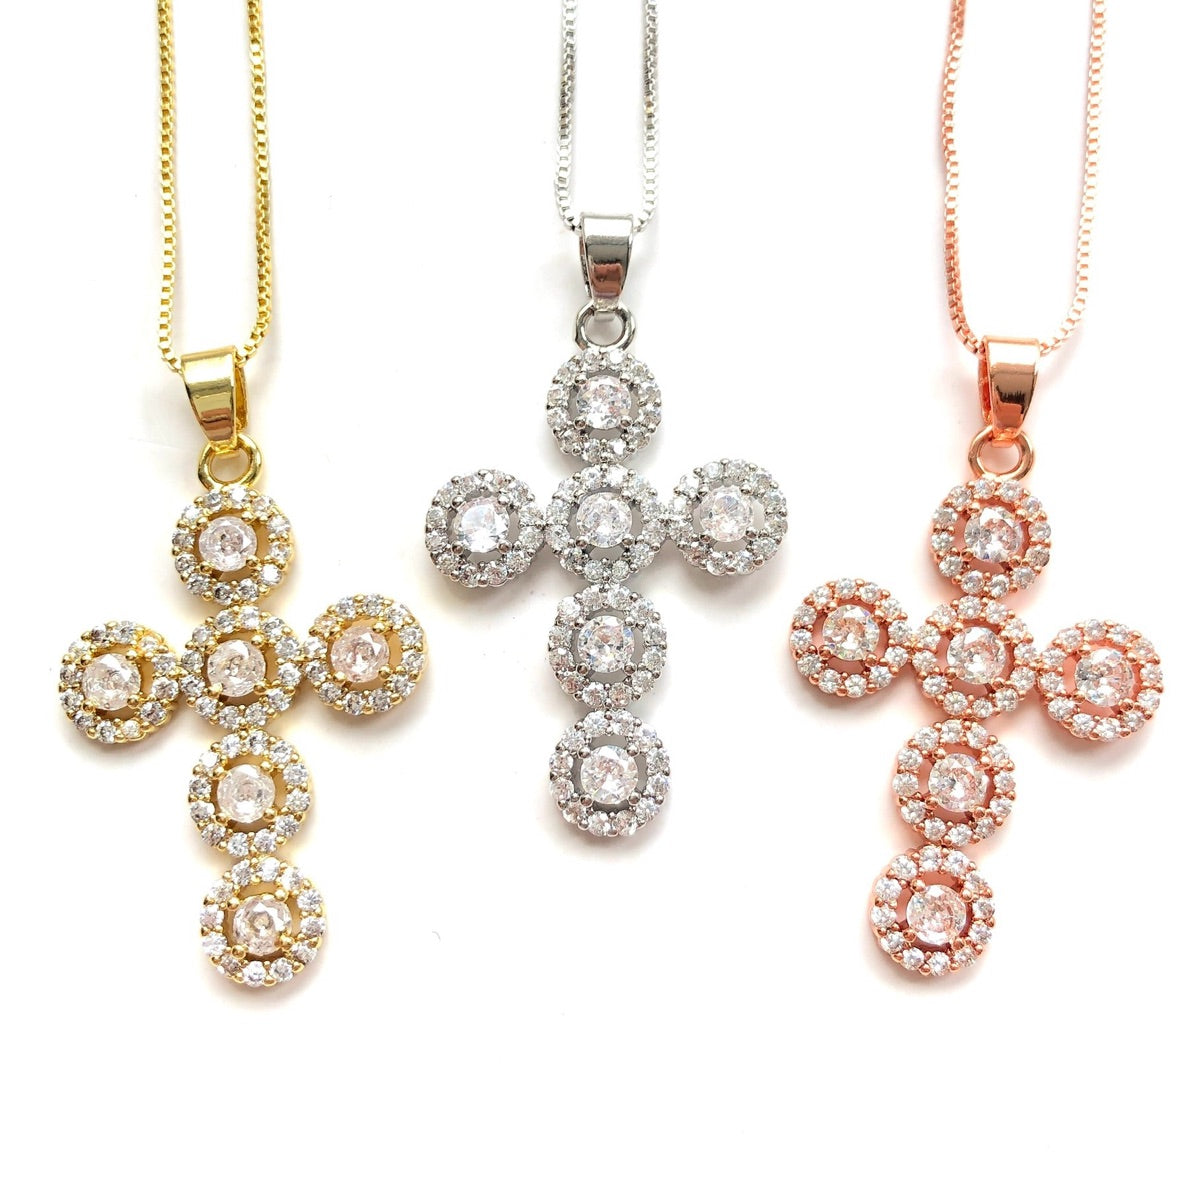 5pcs/lot 39*22mm Clear CZ Paved Cross Necklaces Mix Colors Necklaces Charms Beads Beyond